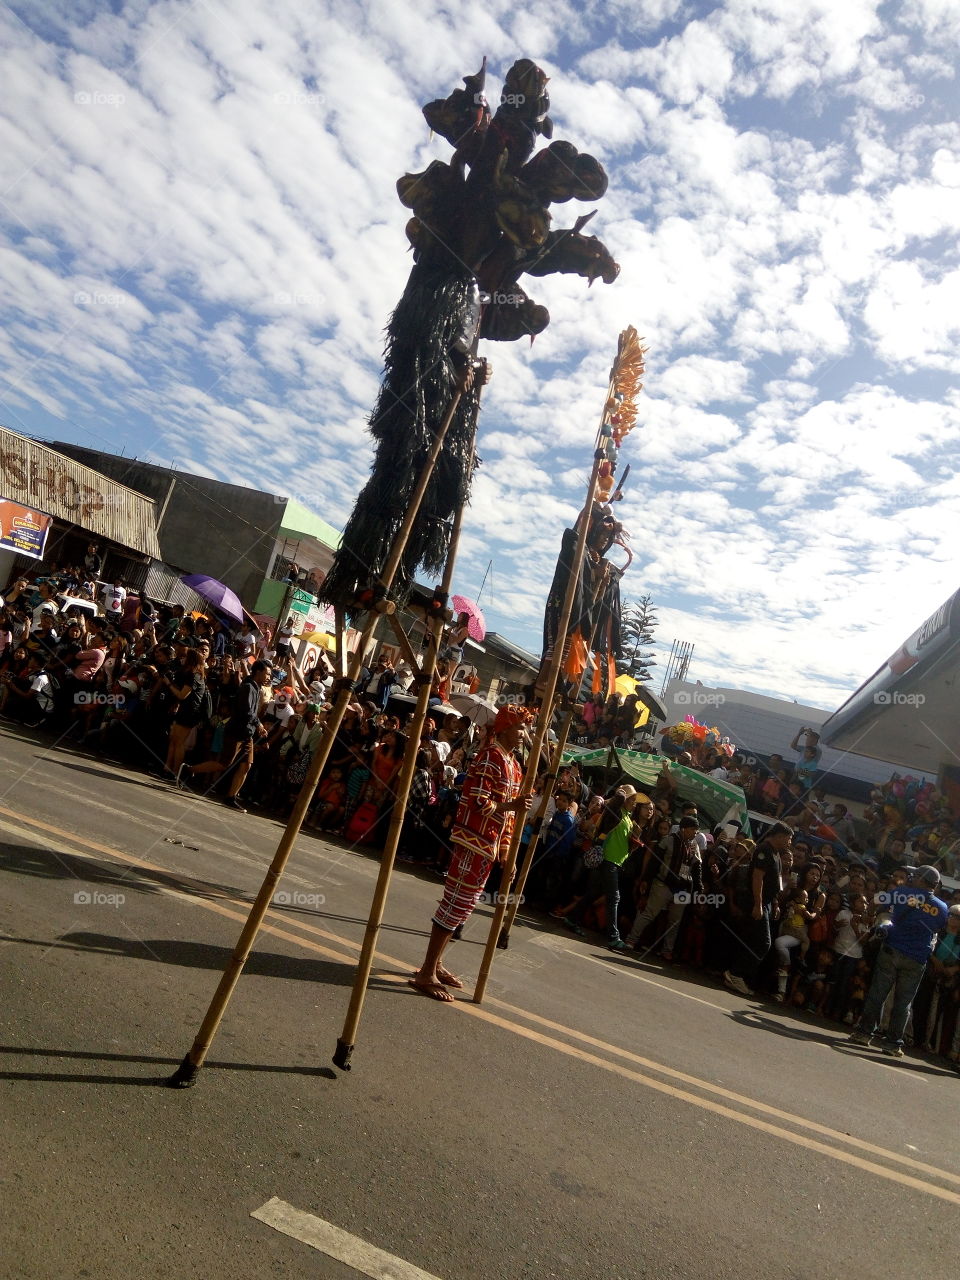 Summer kaamulan festival in Malaybalay City of Bukidnon province, Philippines